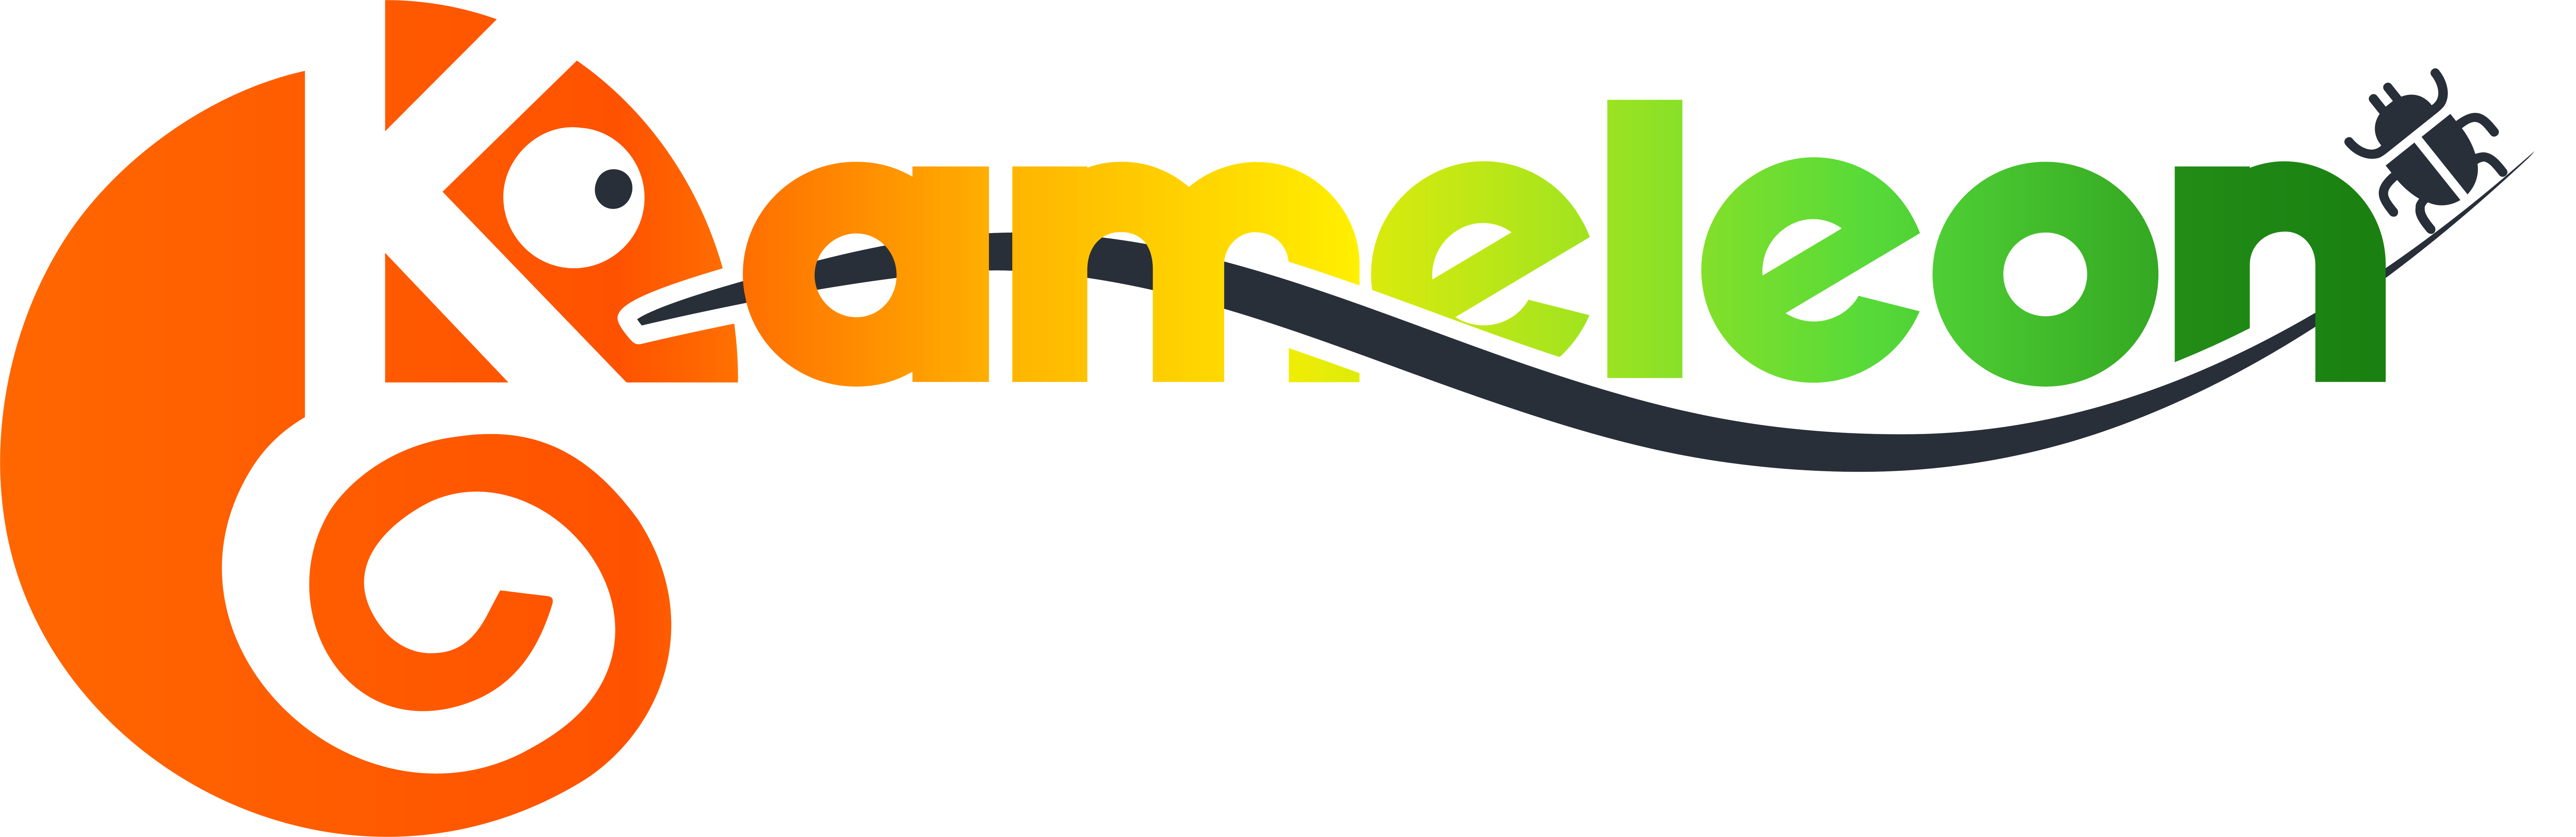 Kameleon Security logo